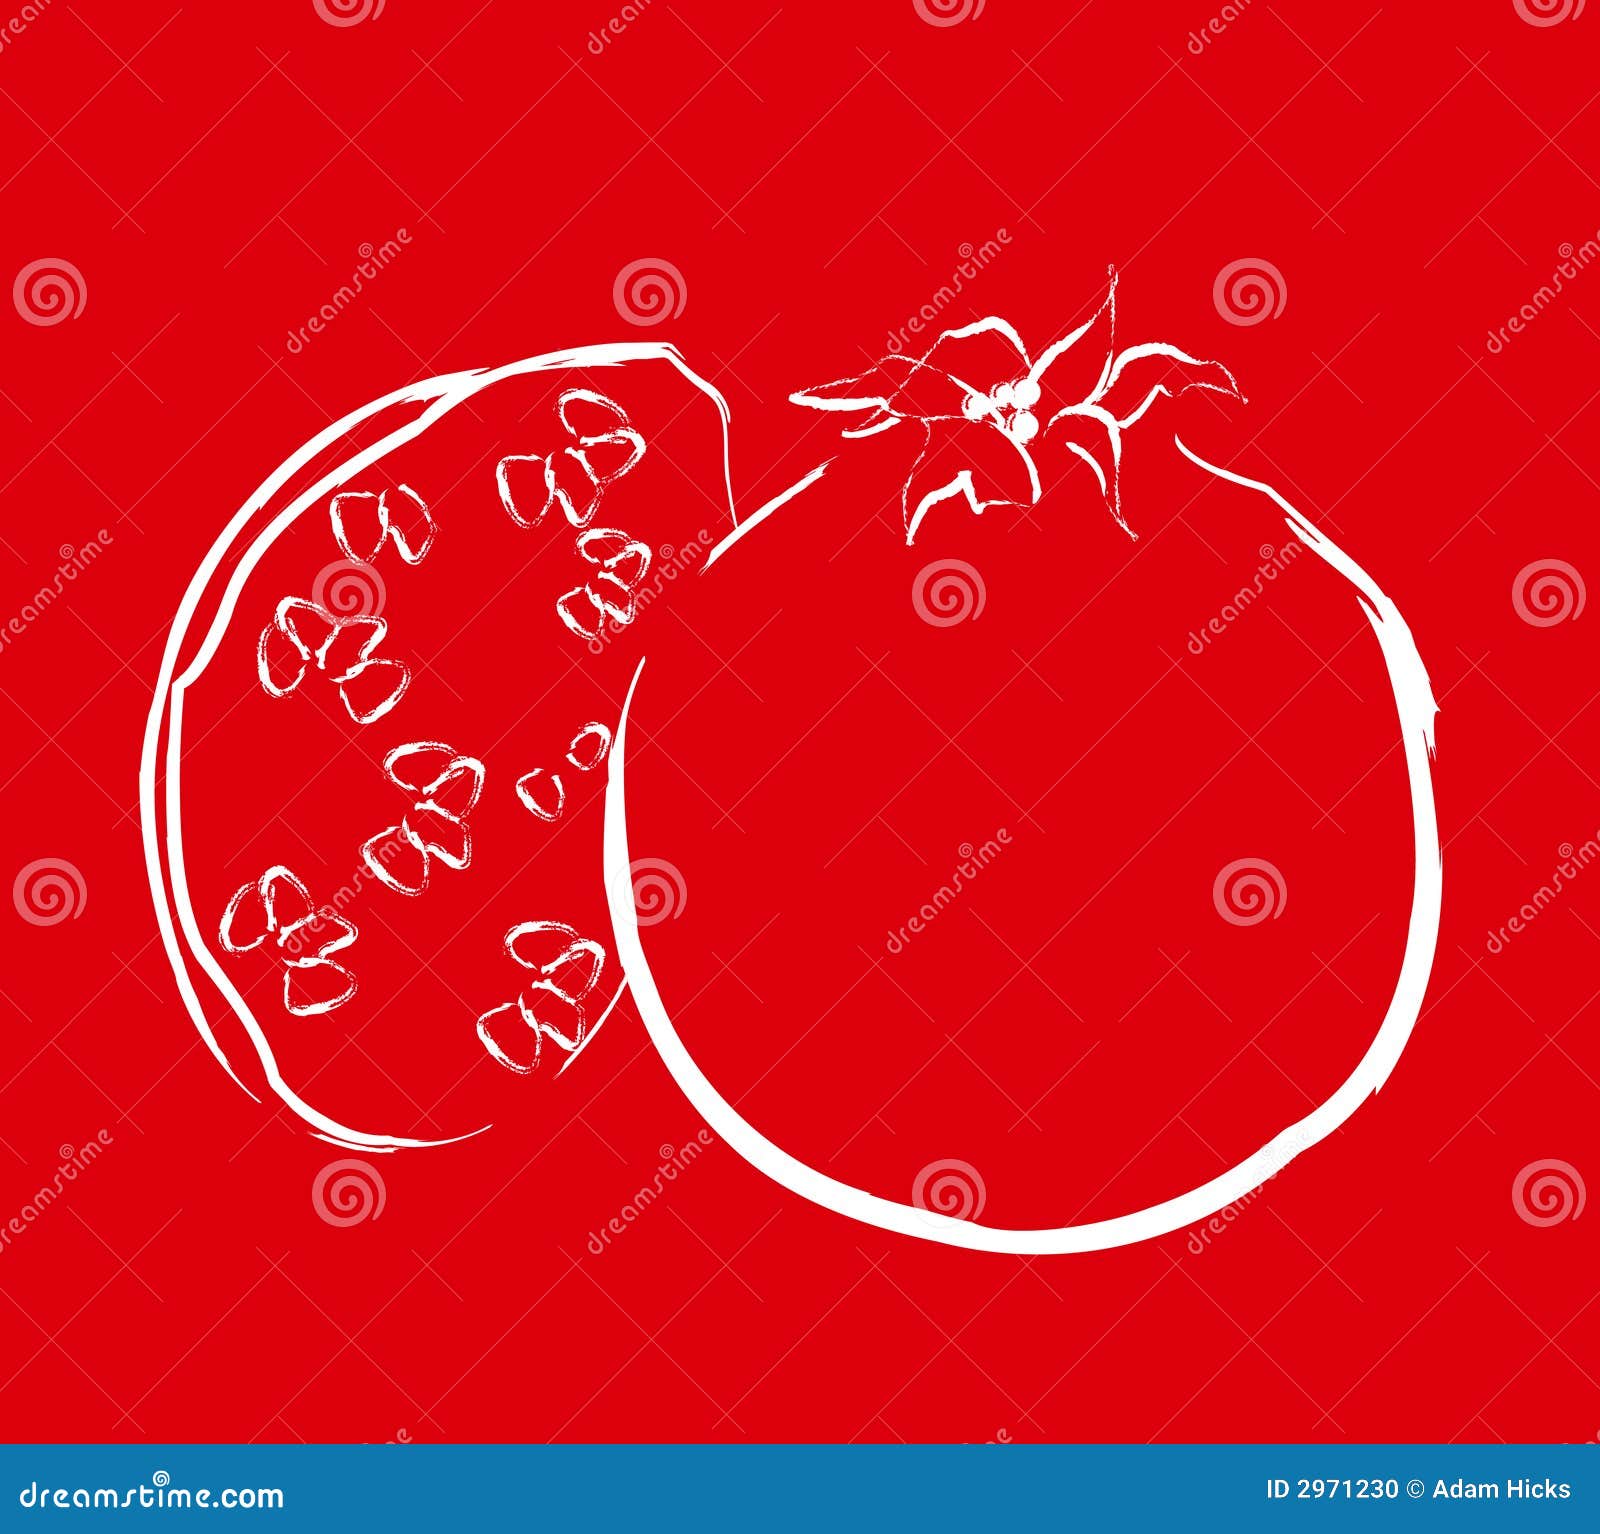 pomegranate-red-2971230.jpg